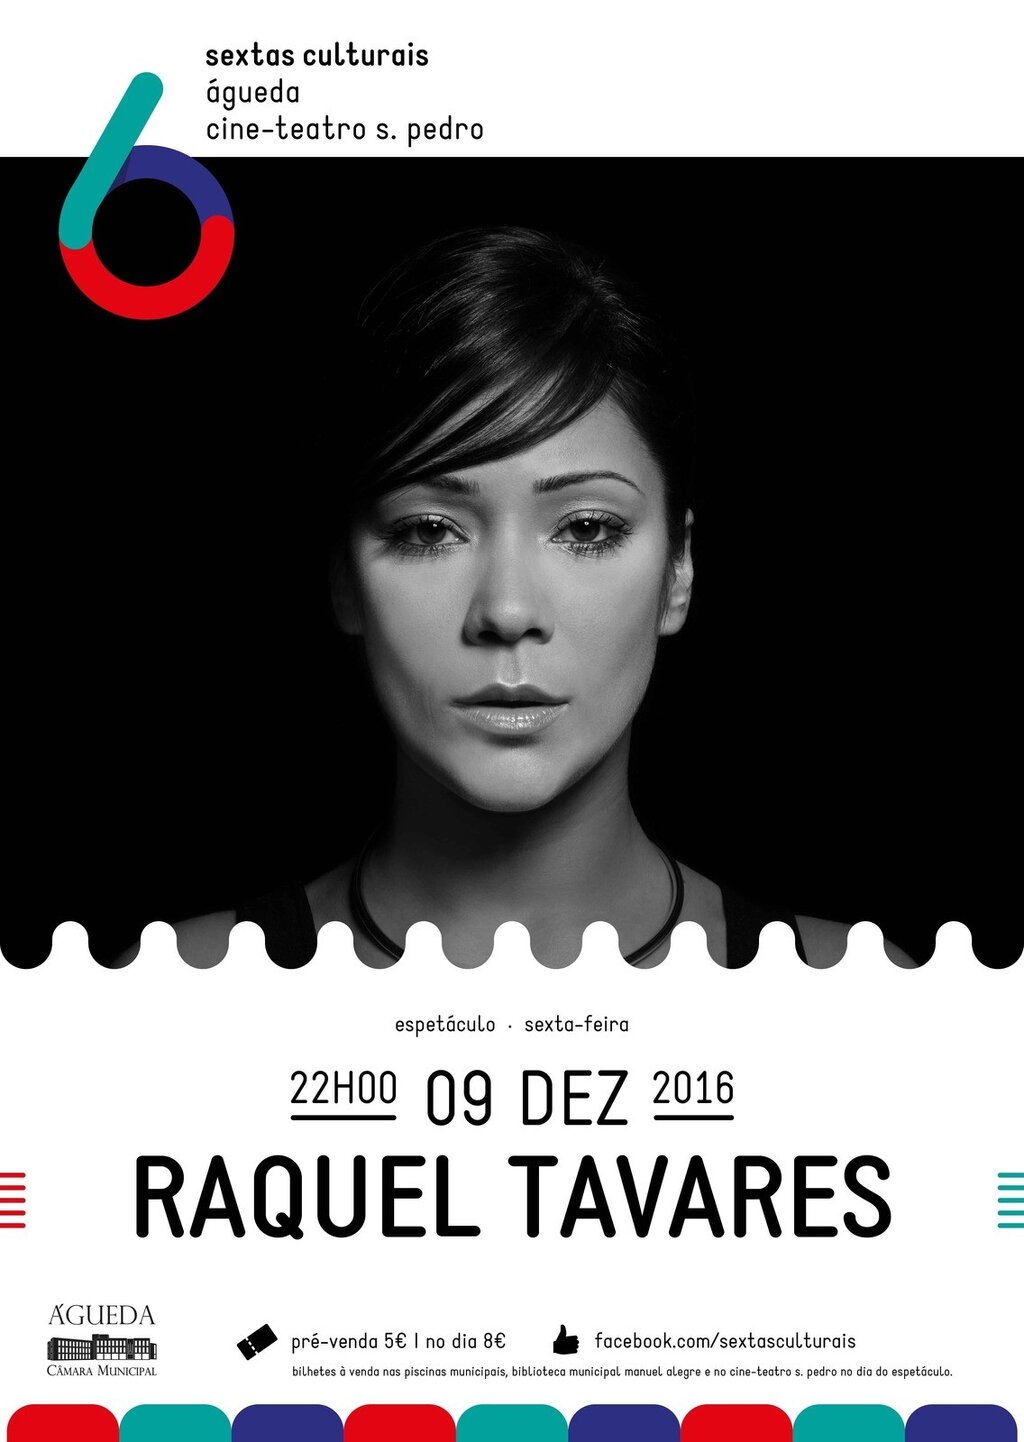 Cine-Teatro São Pedro | Sexta Cultural-Raquel Tavares | 22:00h